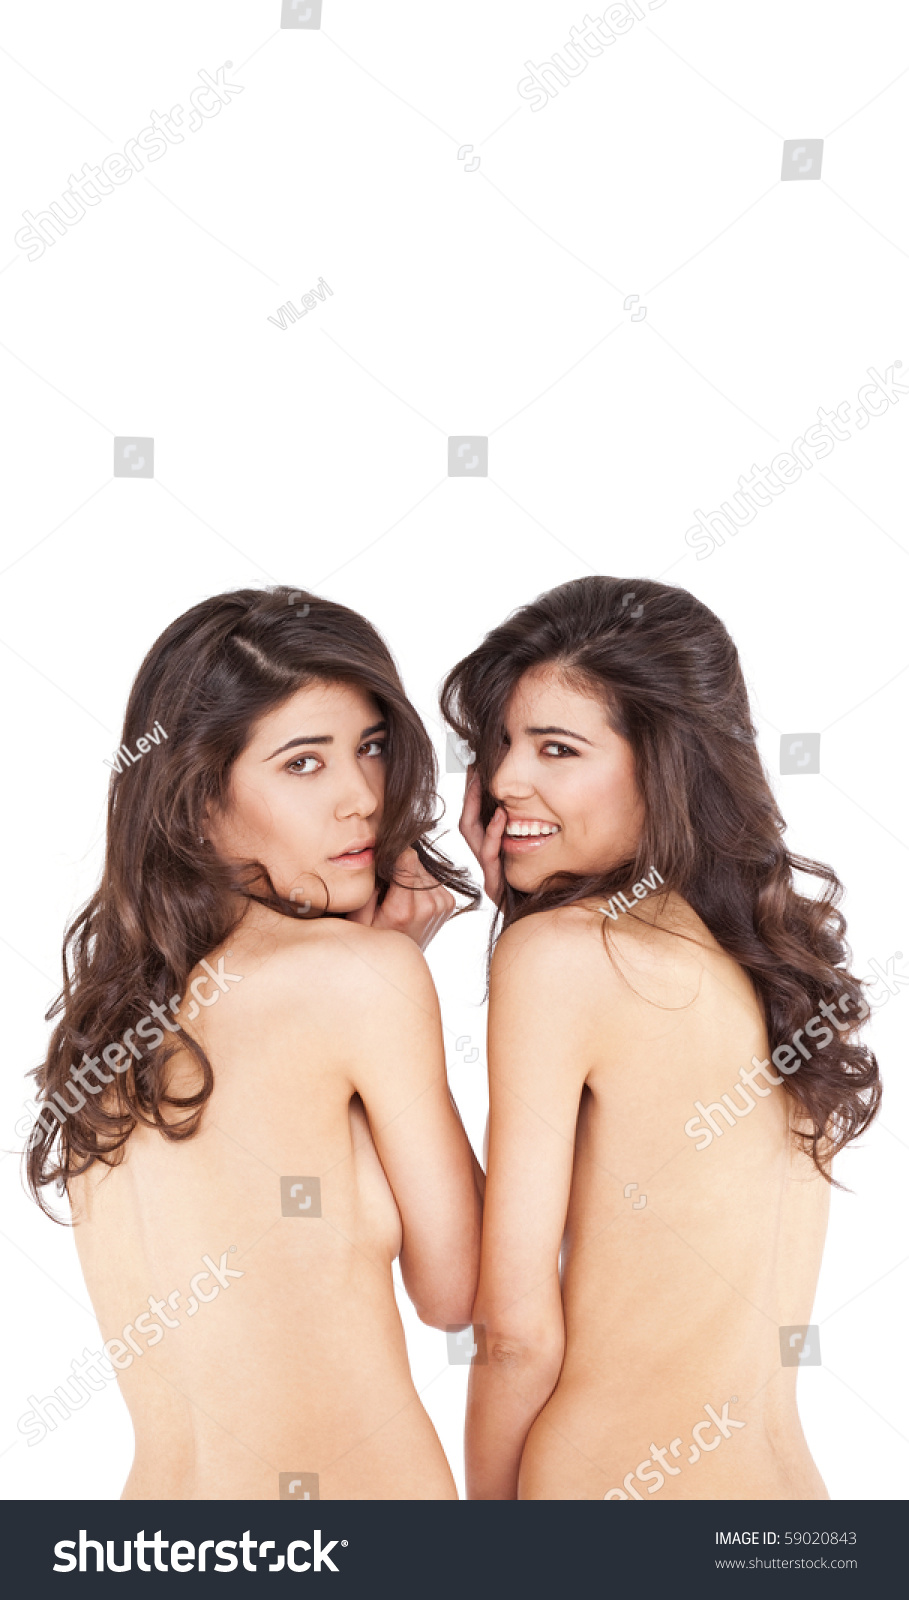 Naked twins girls